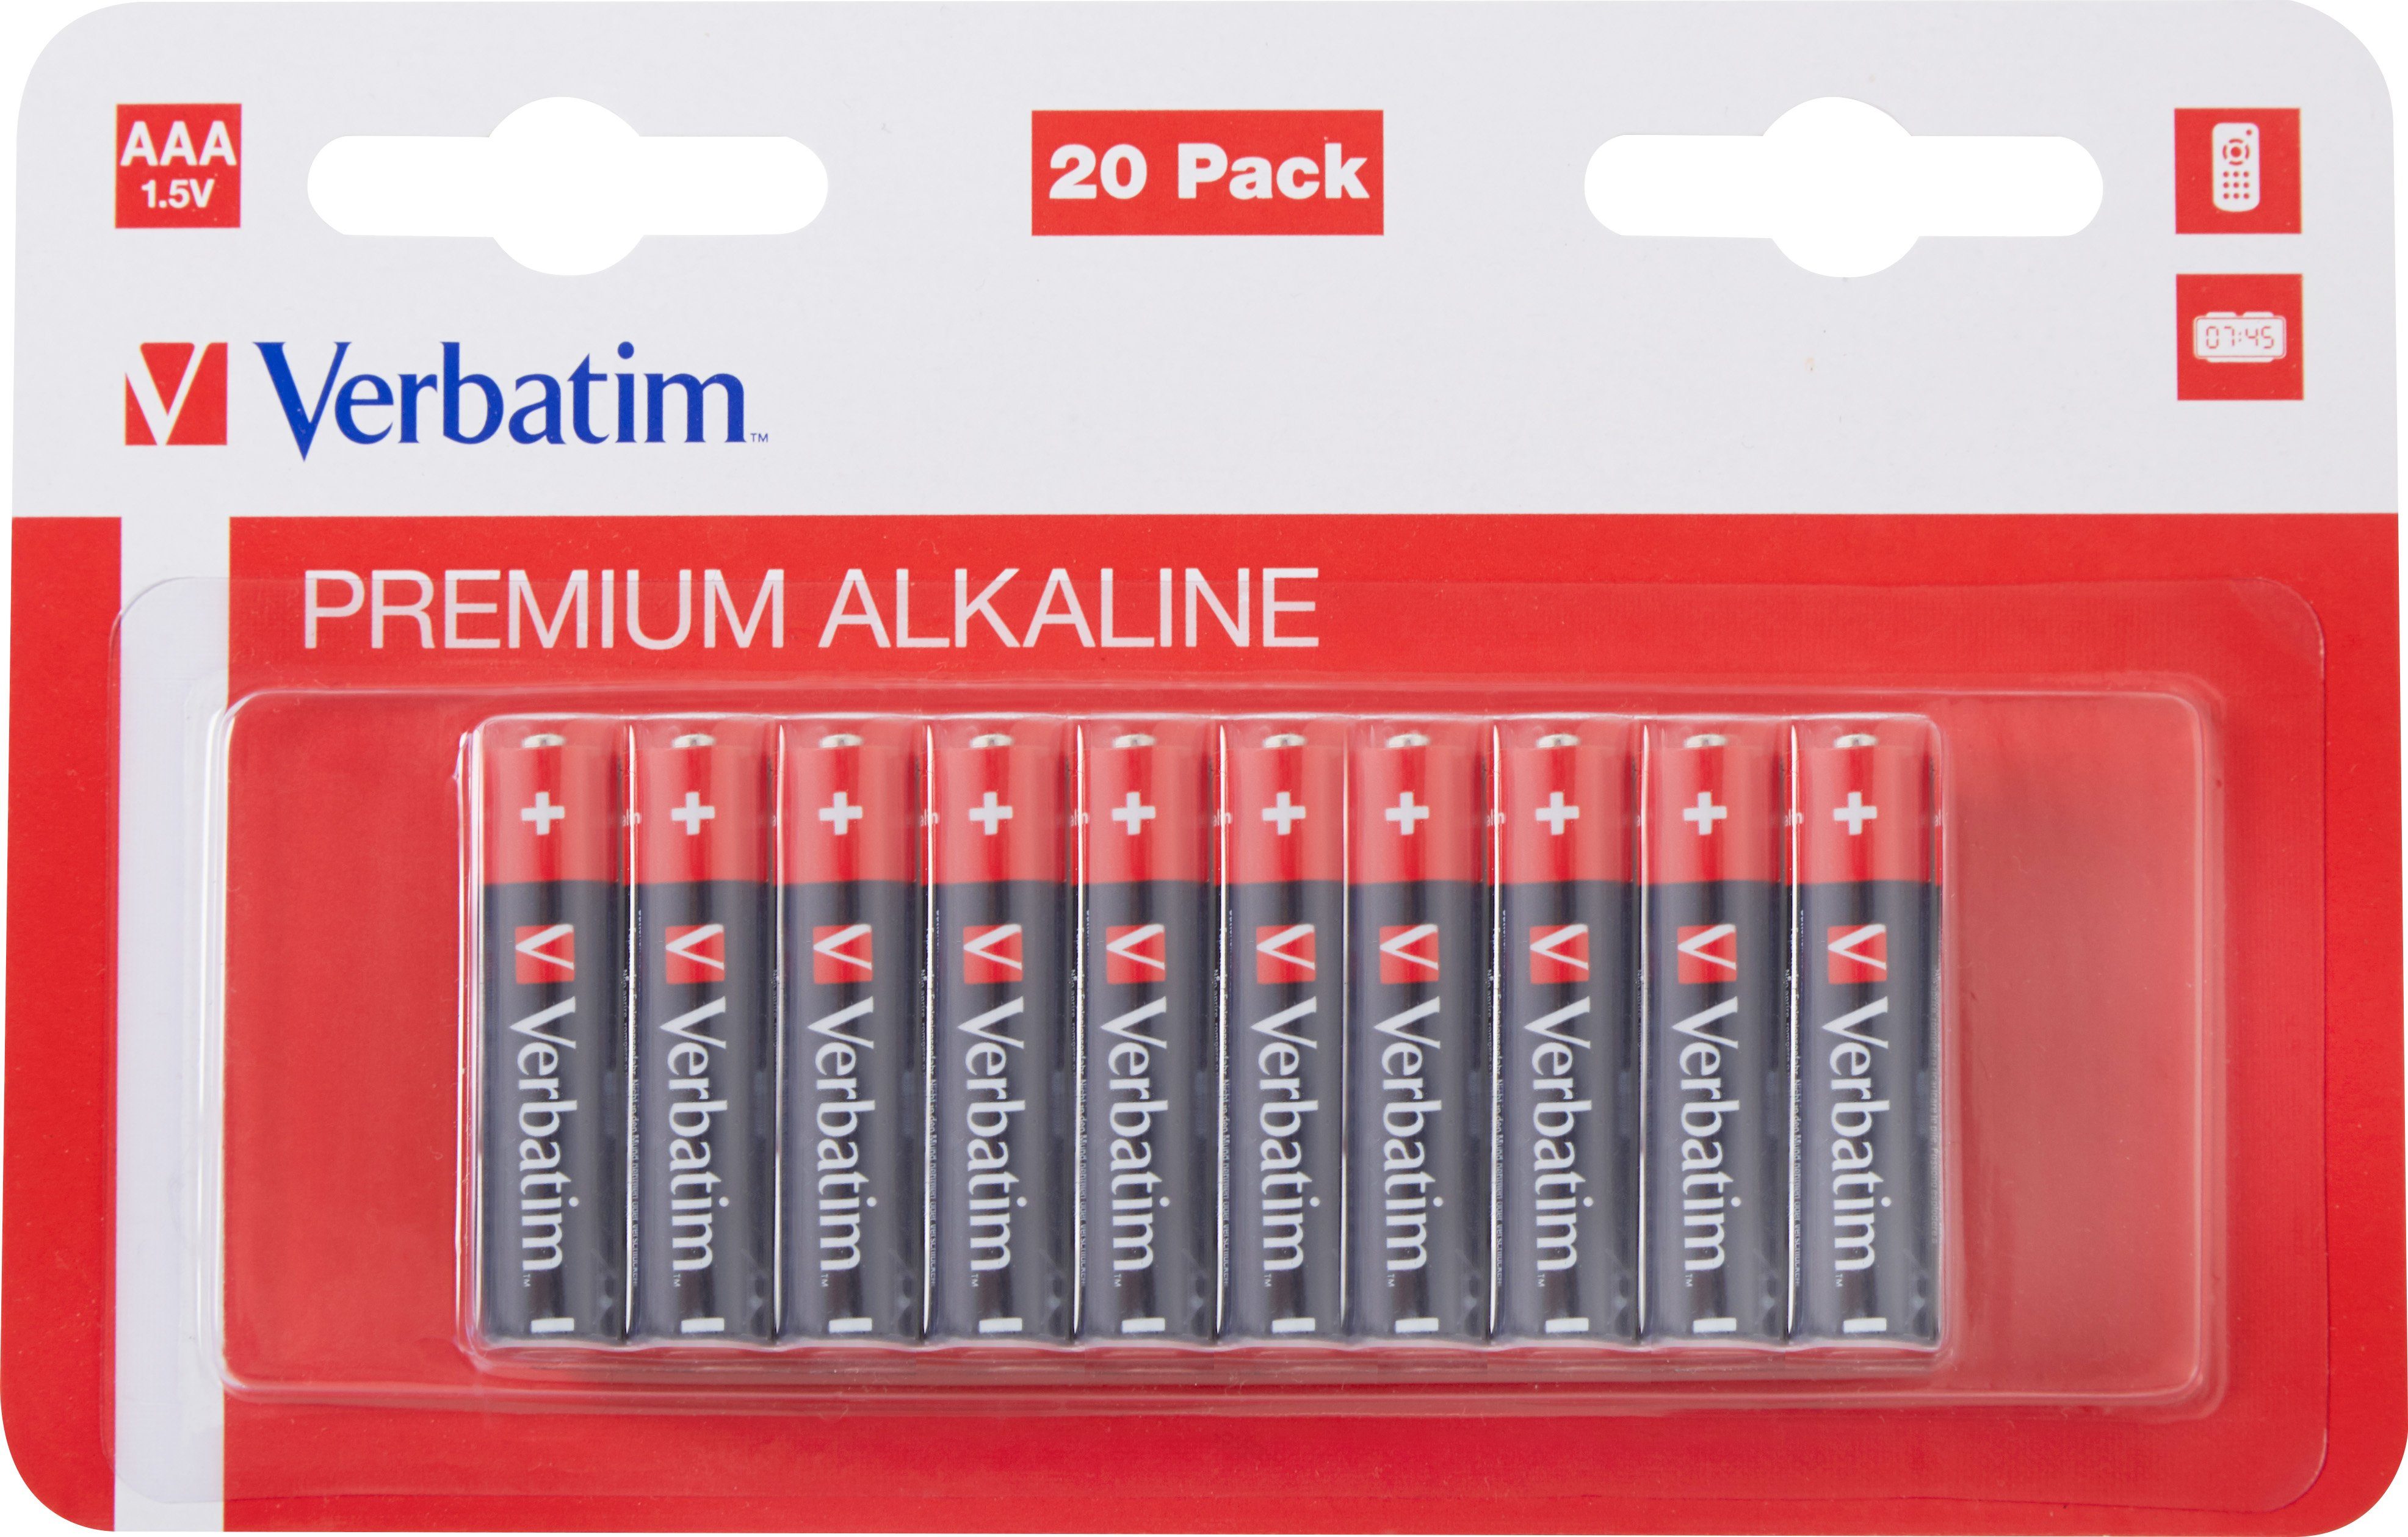 Verbatim Verbatim Alkaline, Premium, Retail AAA, LR03, 1.5V Batterie Bl Batterie Micro